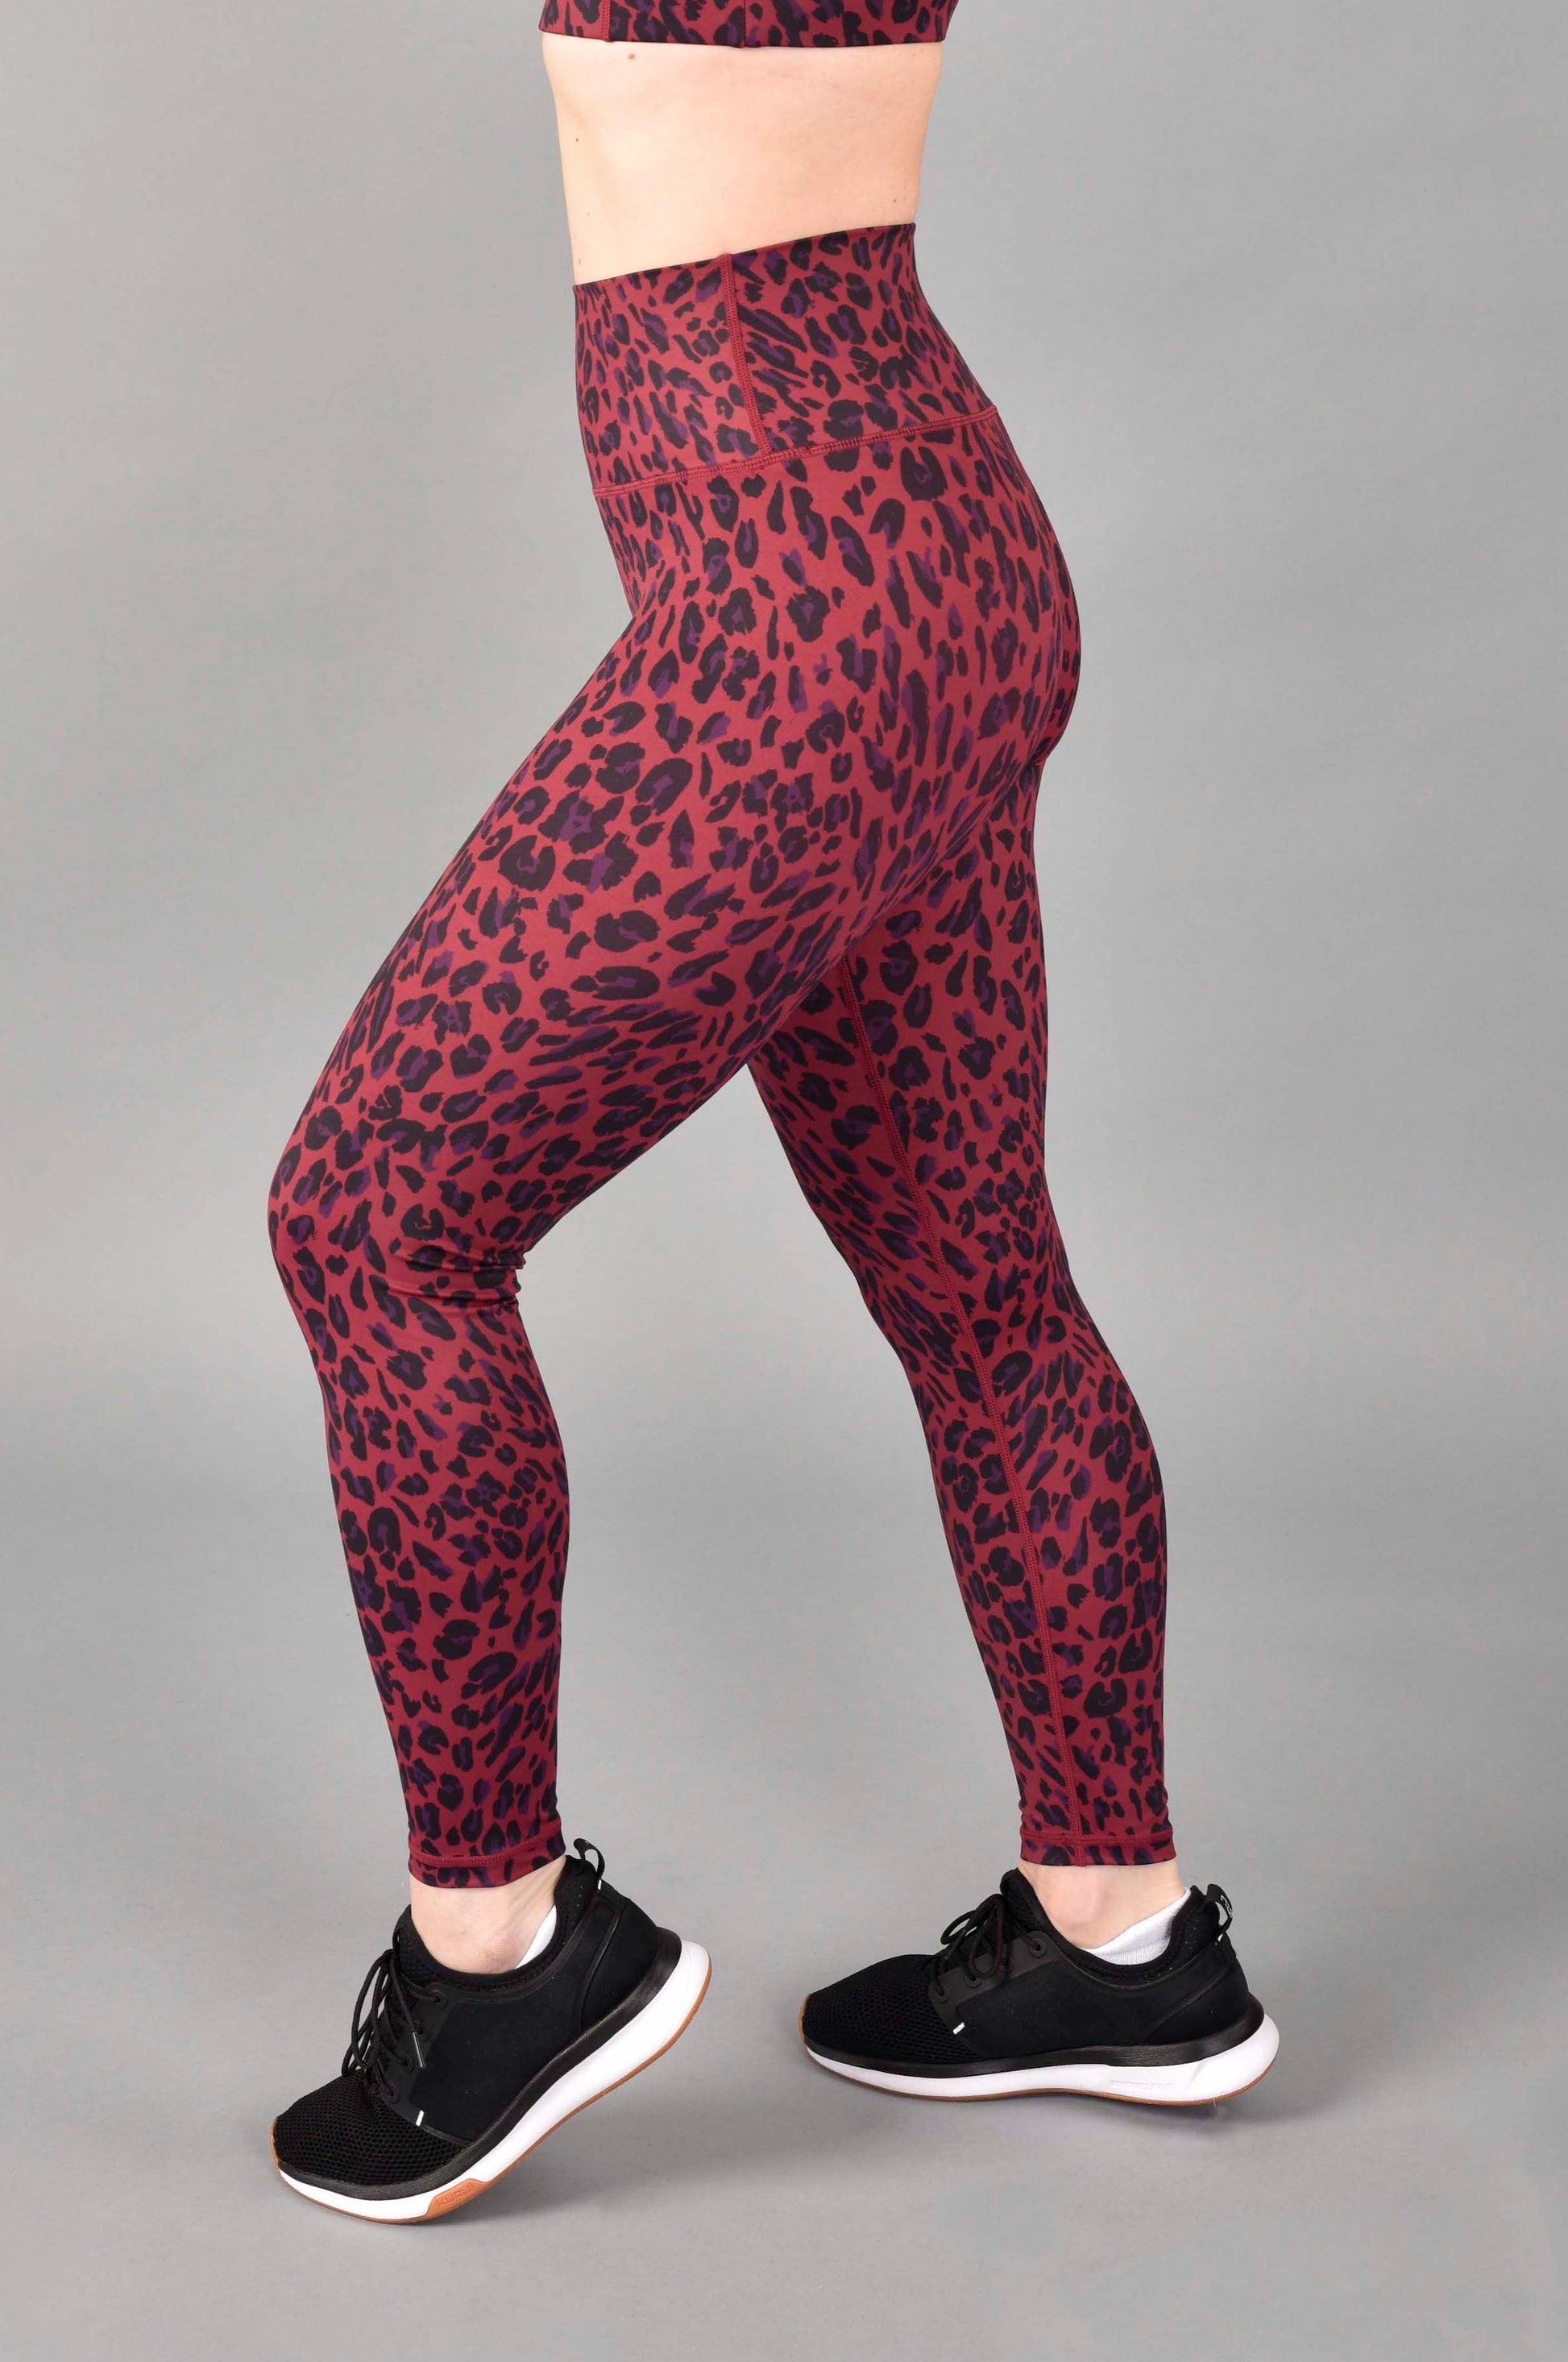 Pantyhose Leopard Print Women, Velvet Pantyhose Stockings